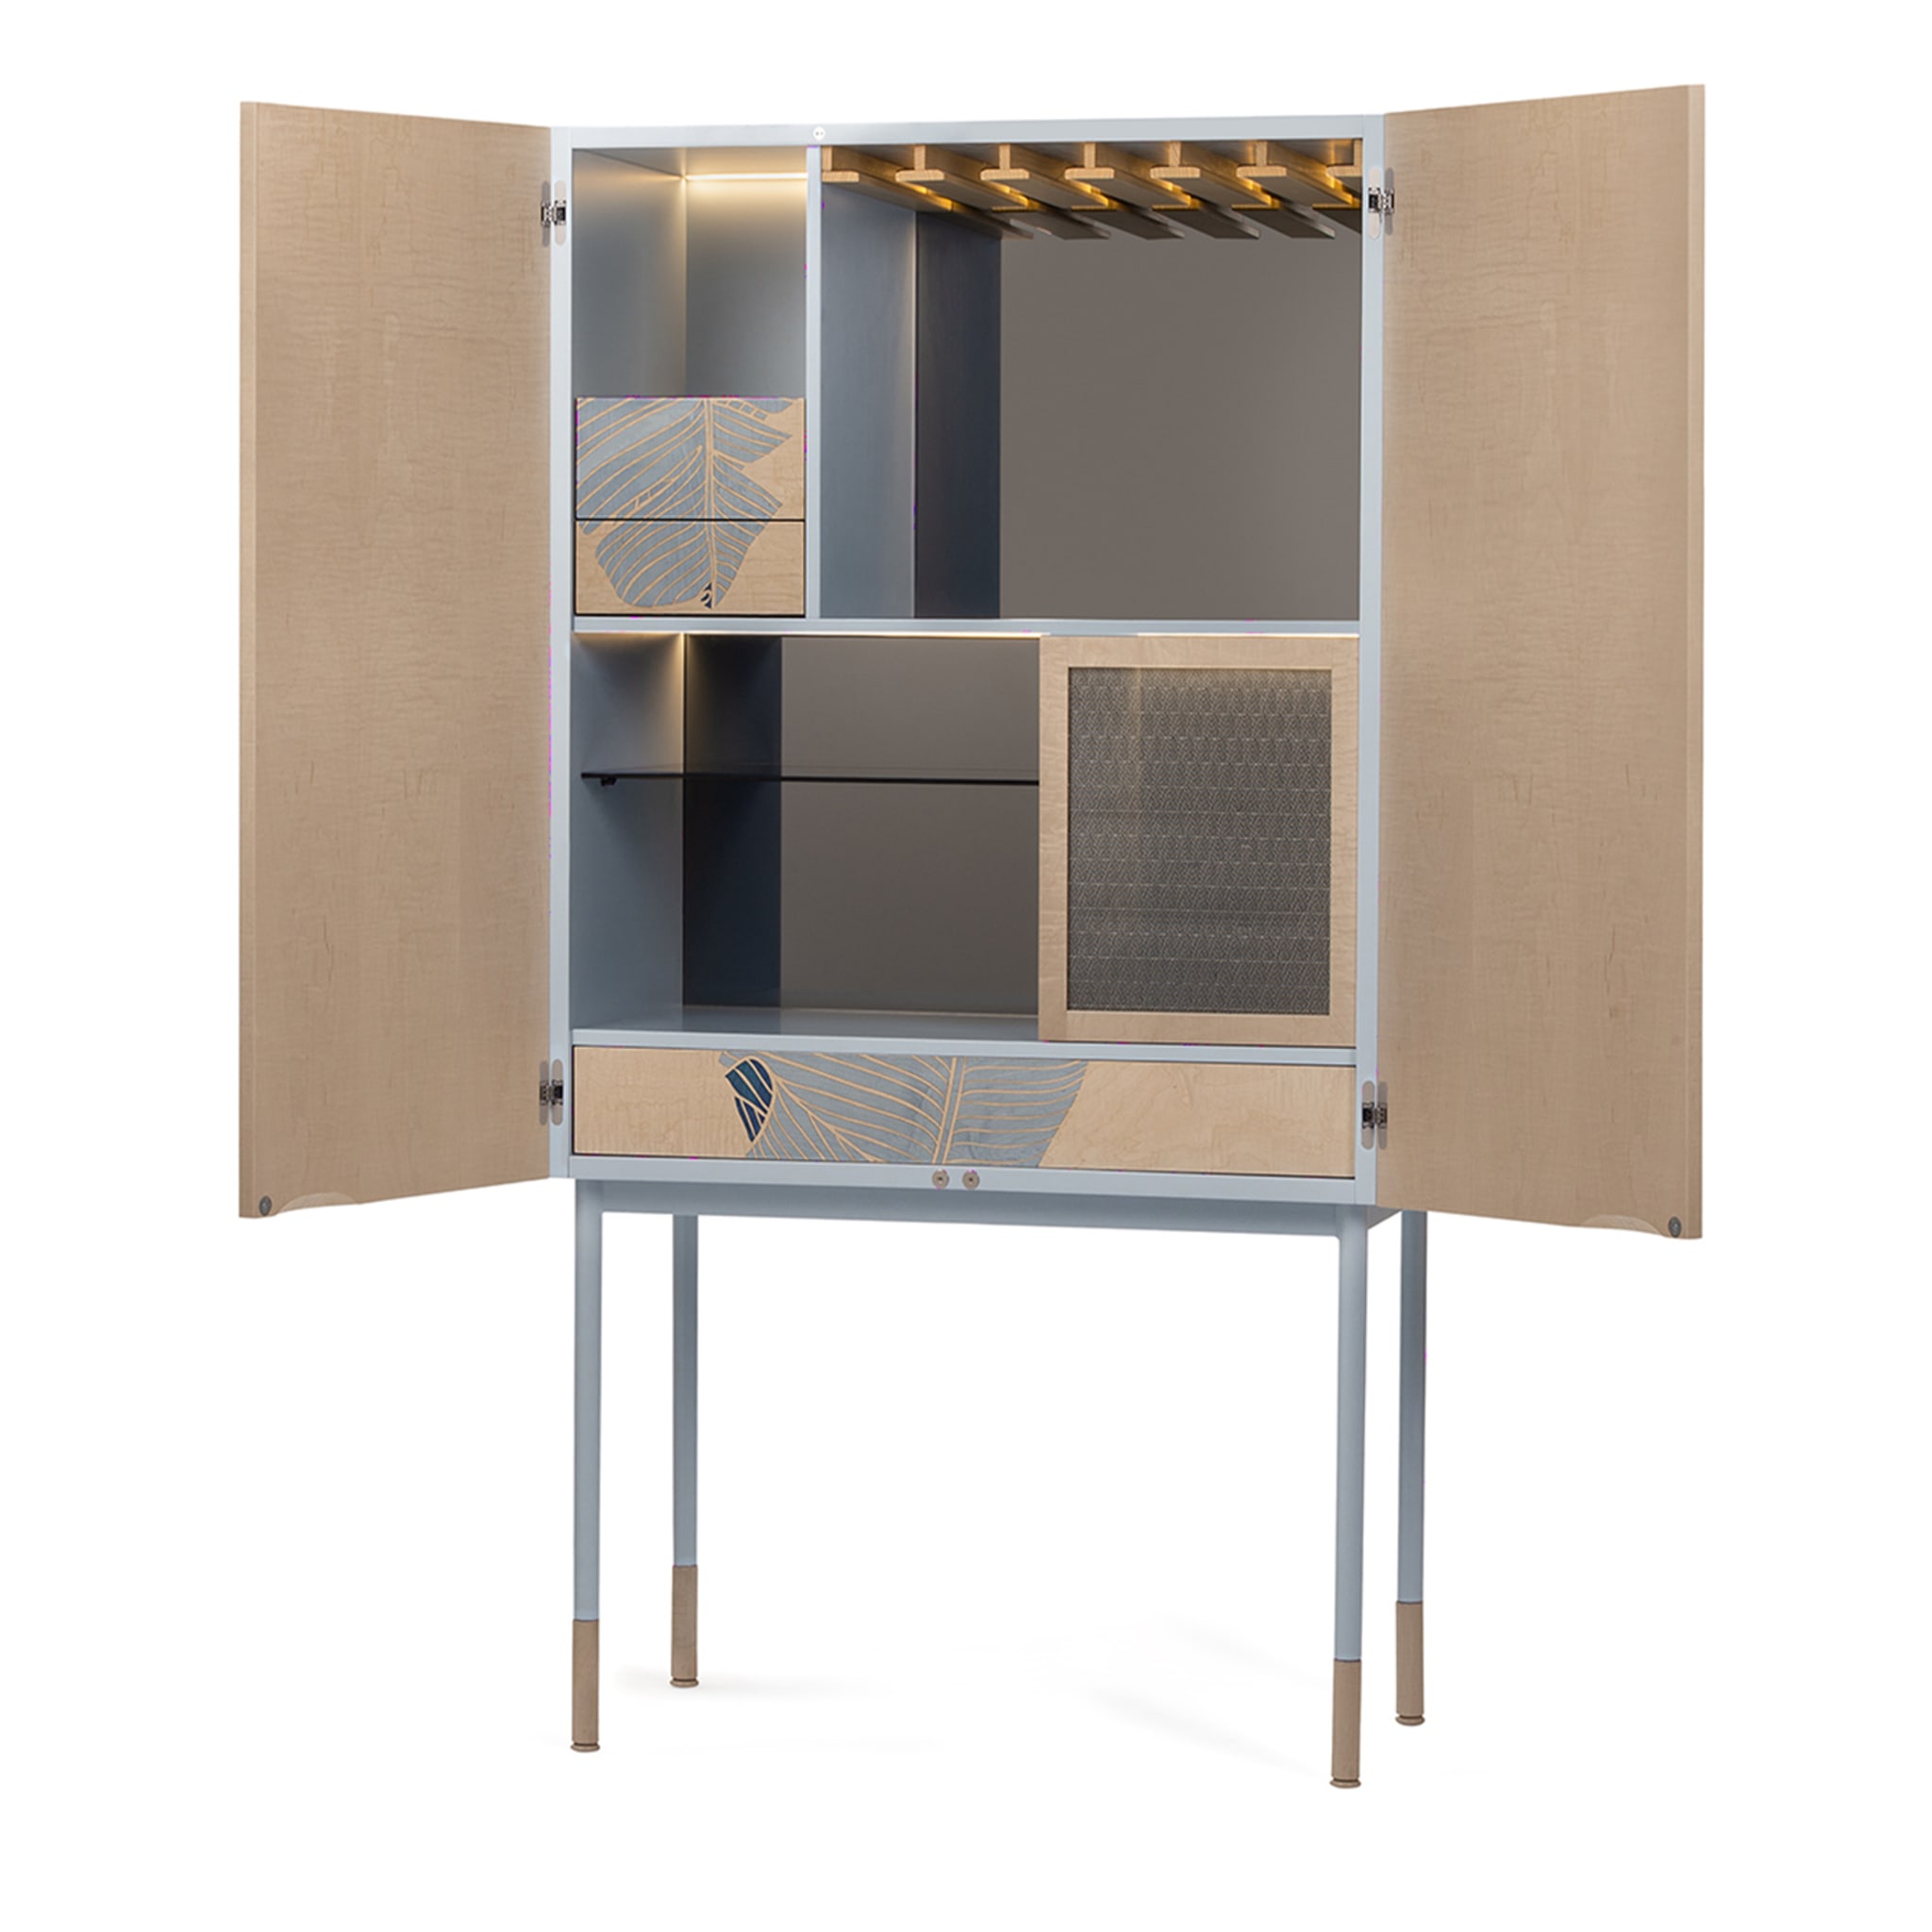 Basjoo Azure Cabinet by Hebanon Studio - Alternative view 2